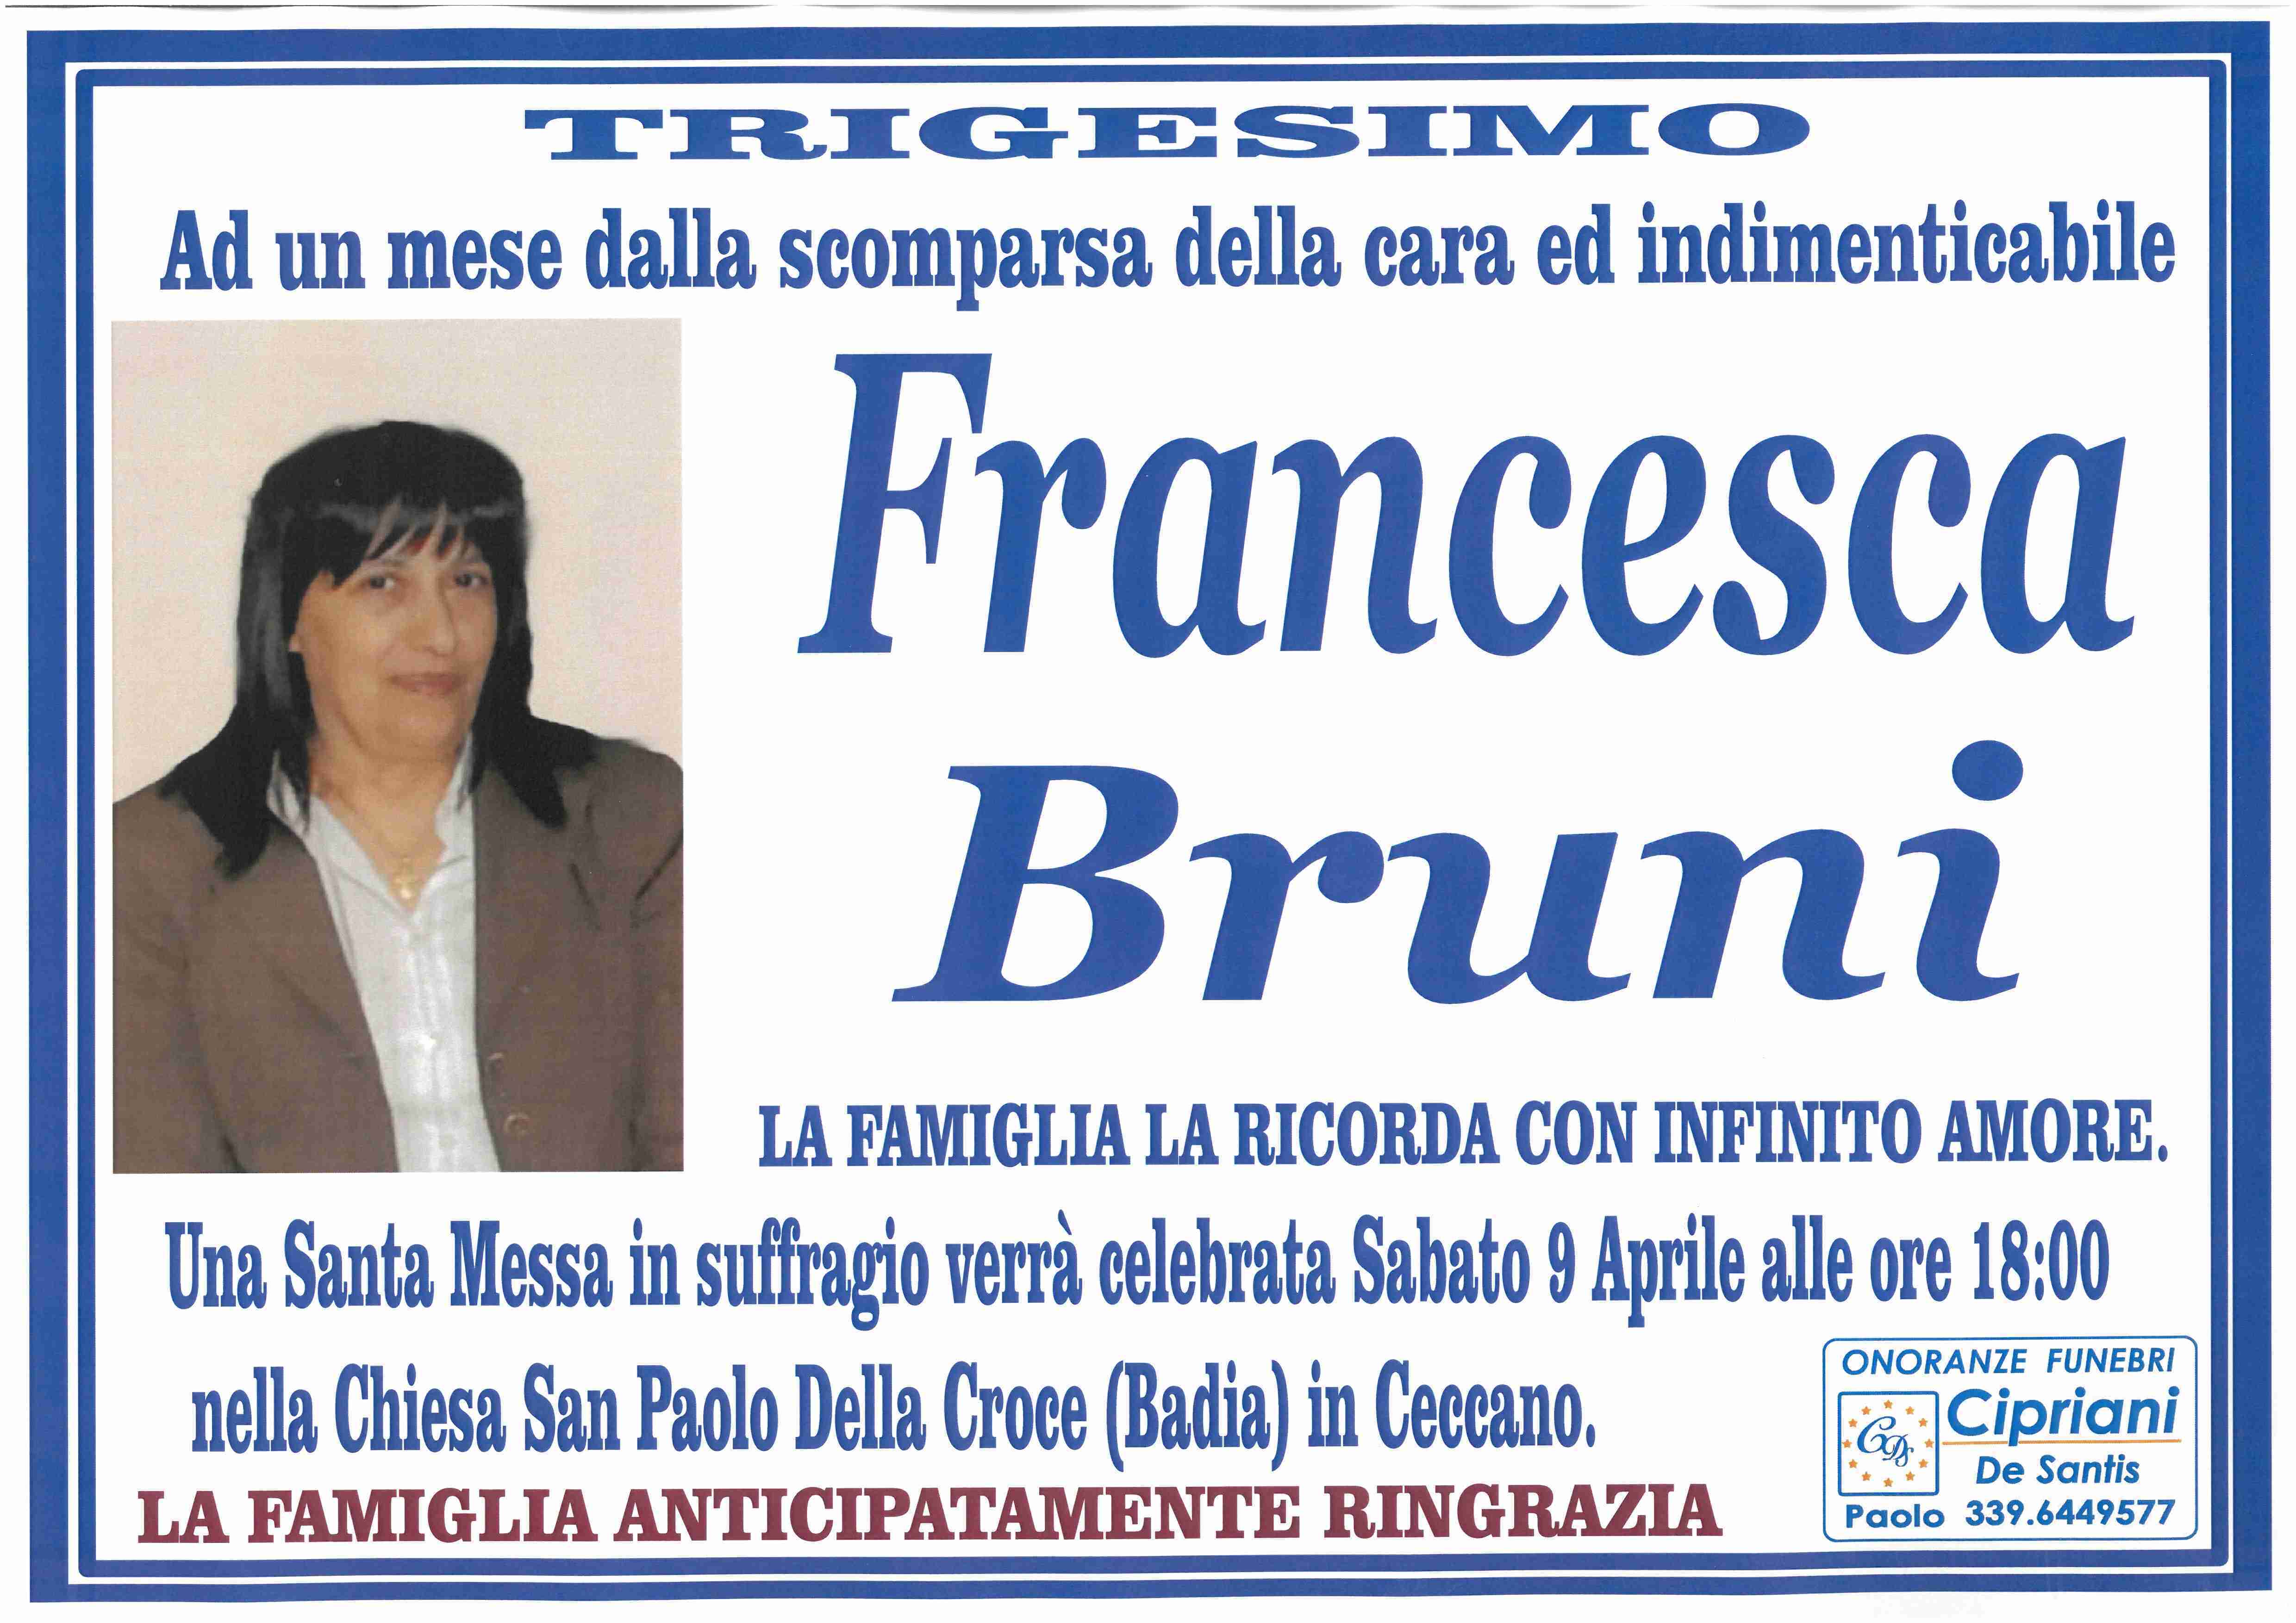 Francesca Bruni